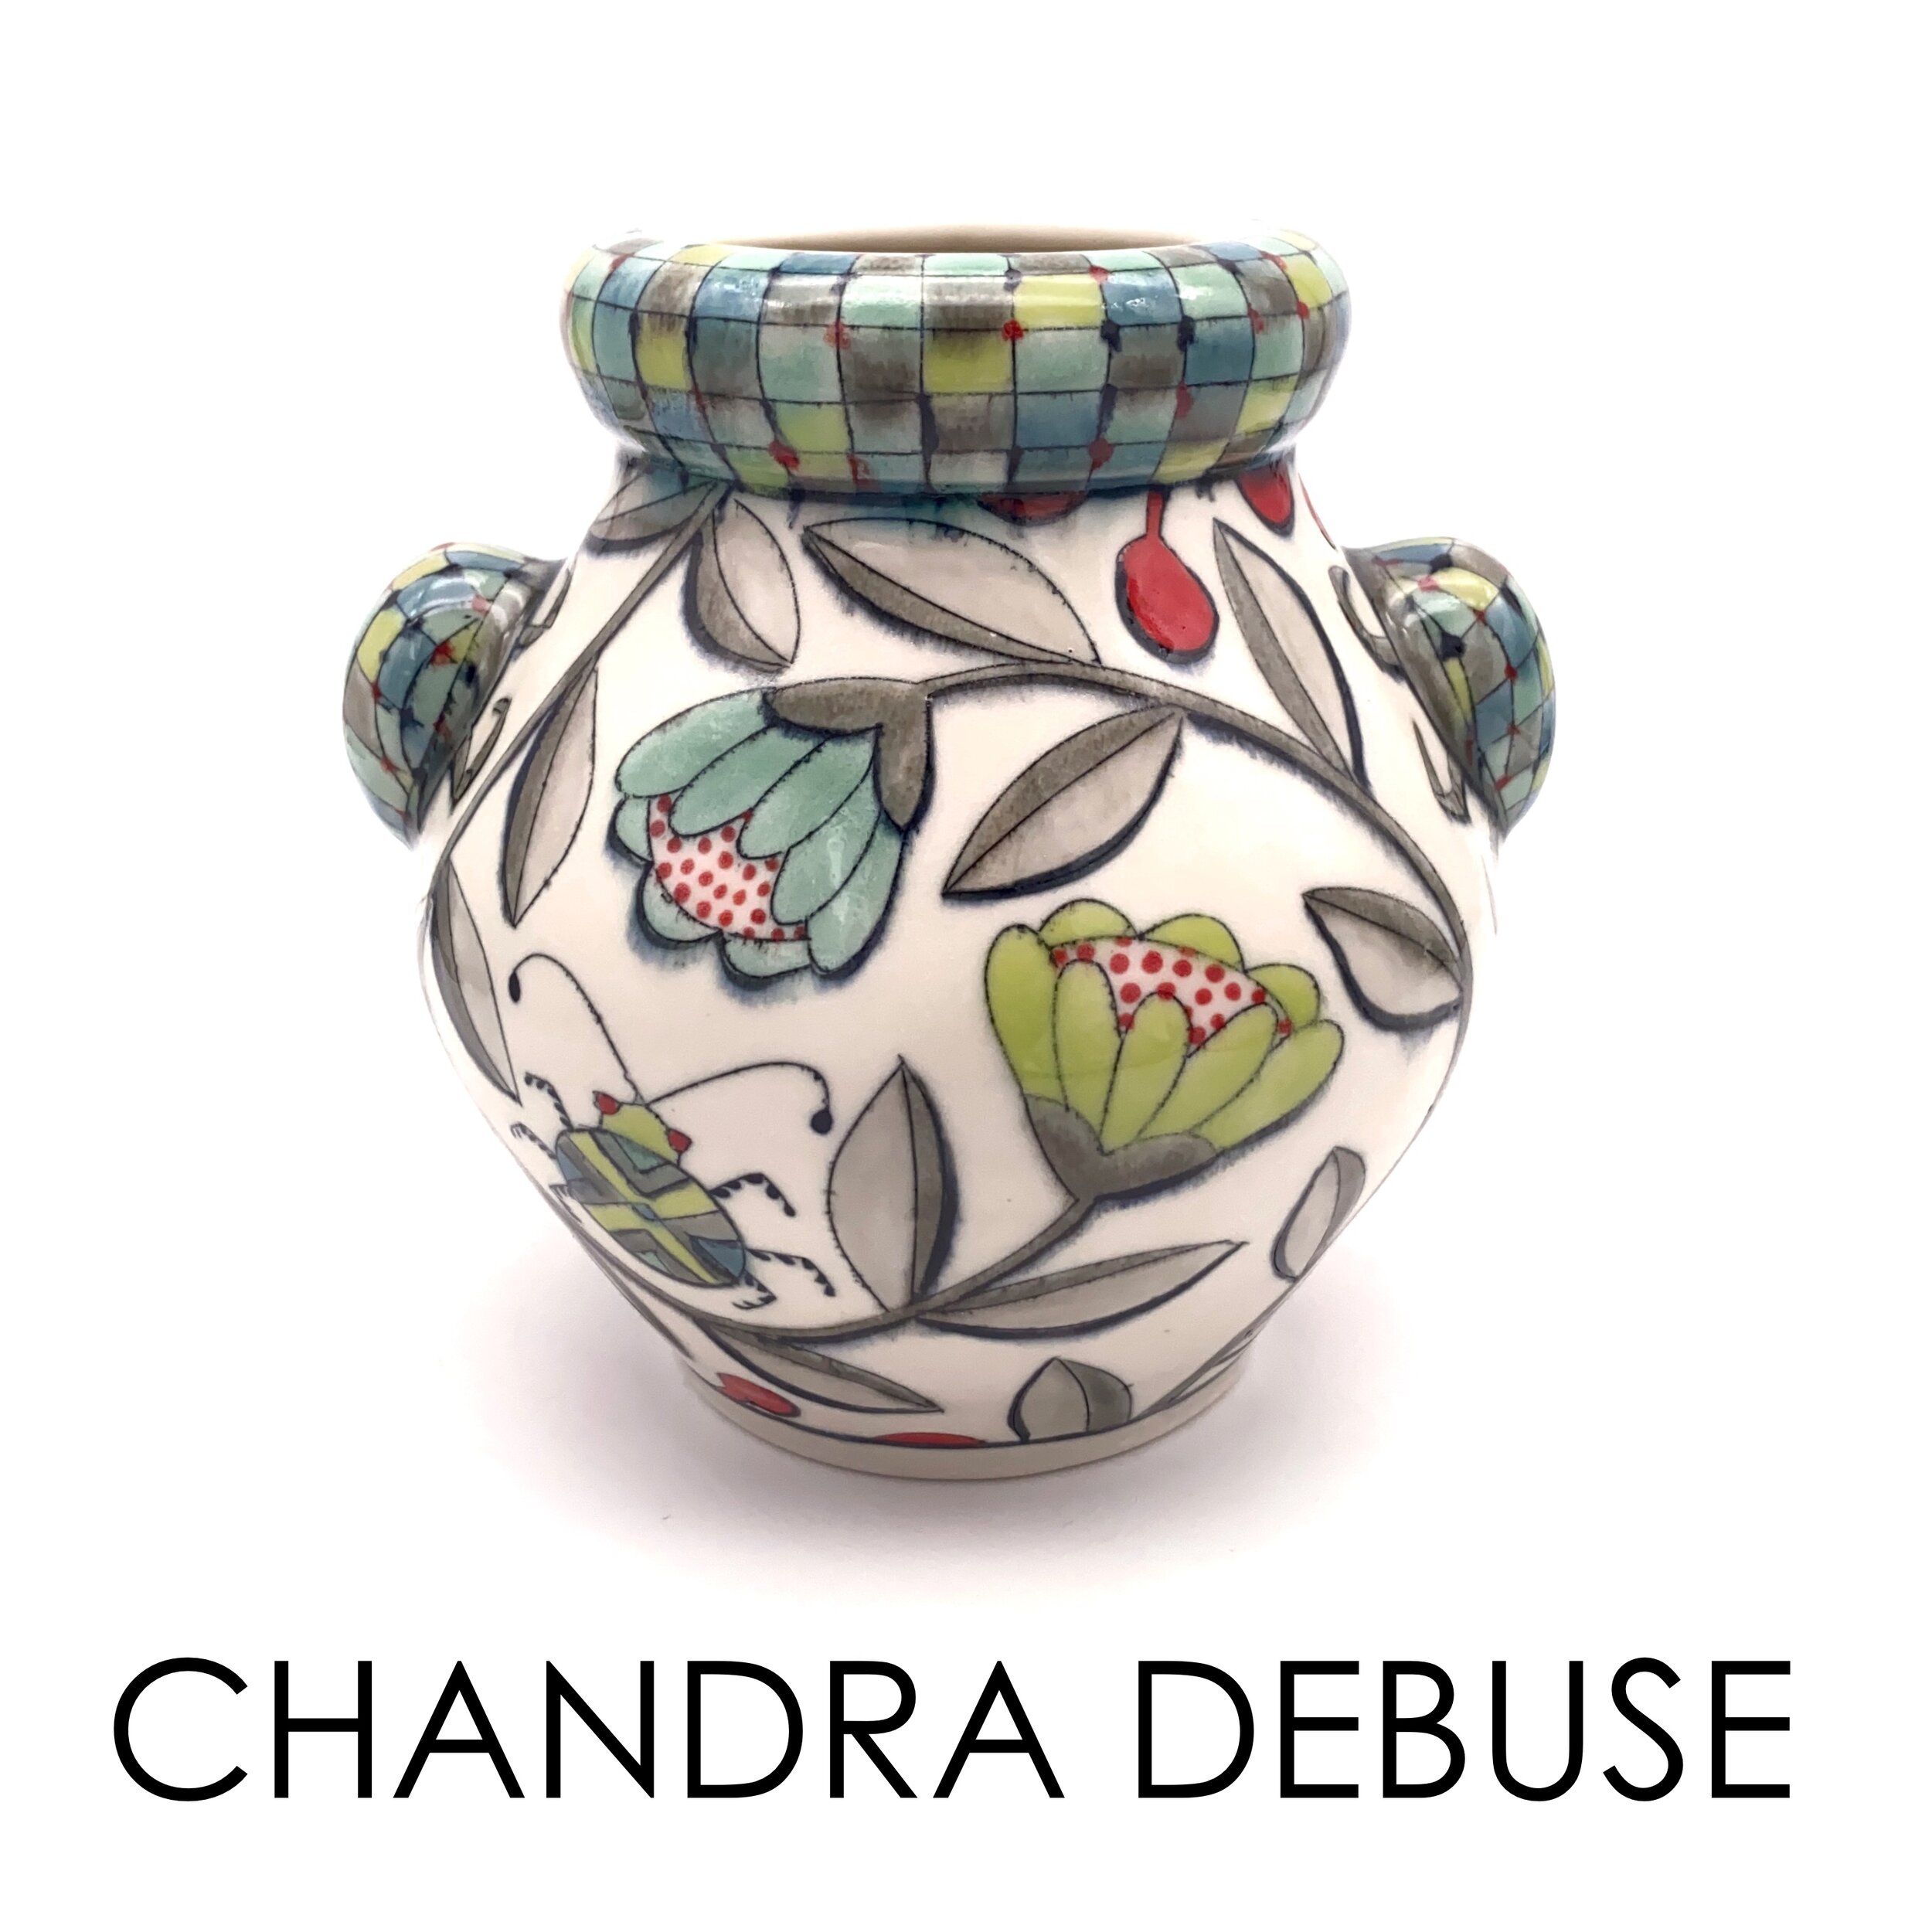 Chandra DeBuse